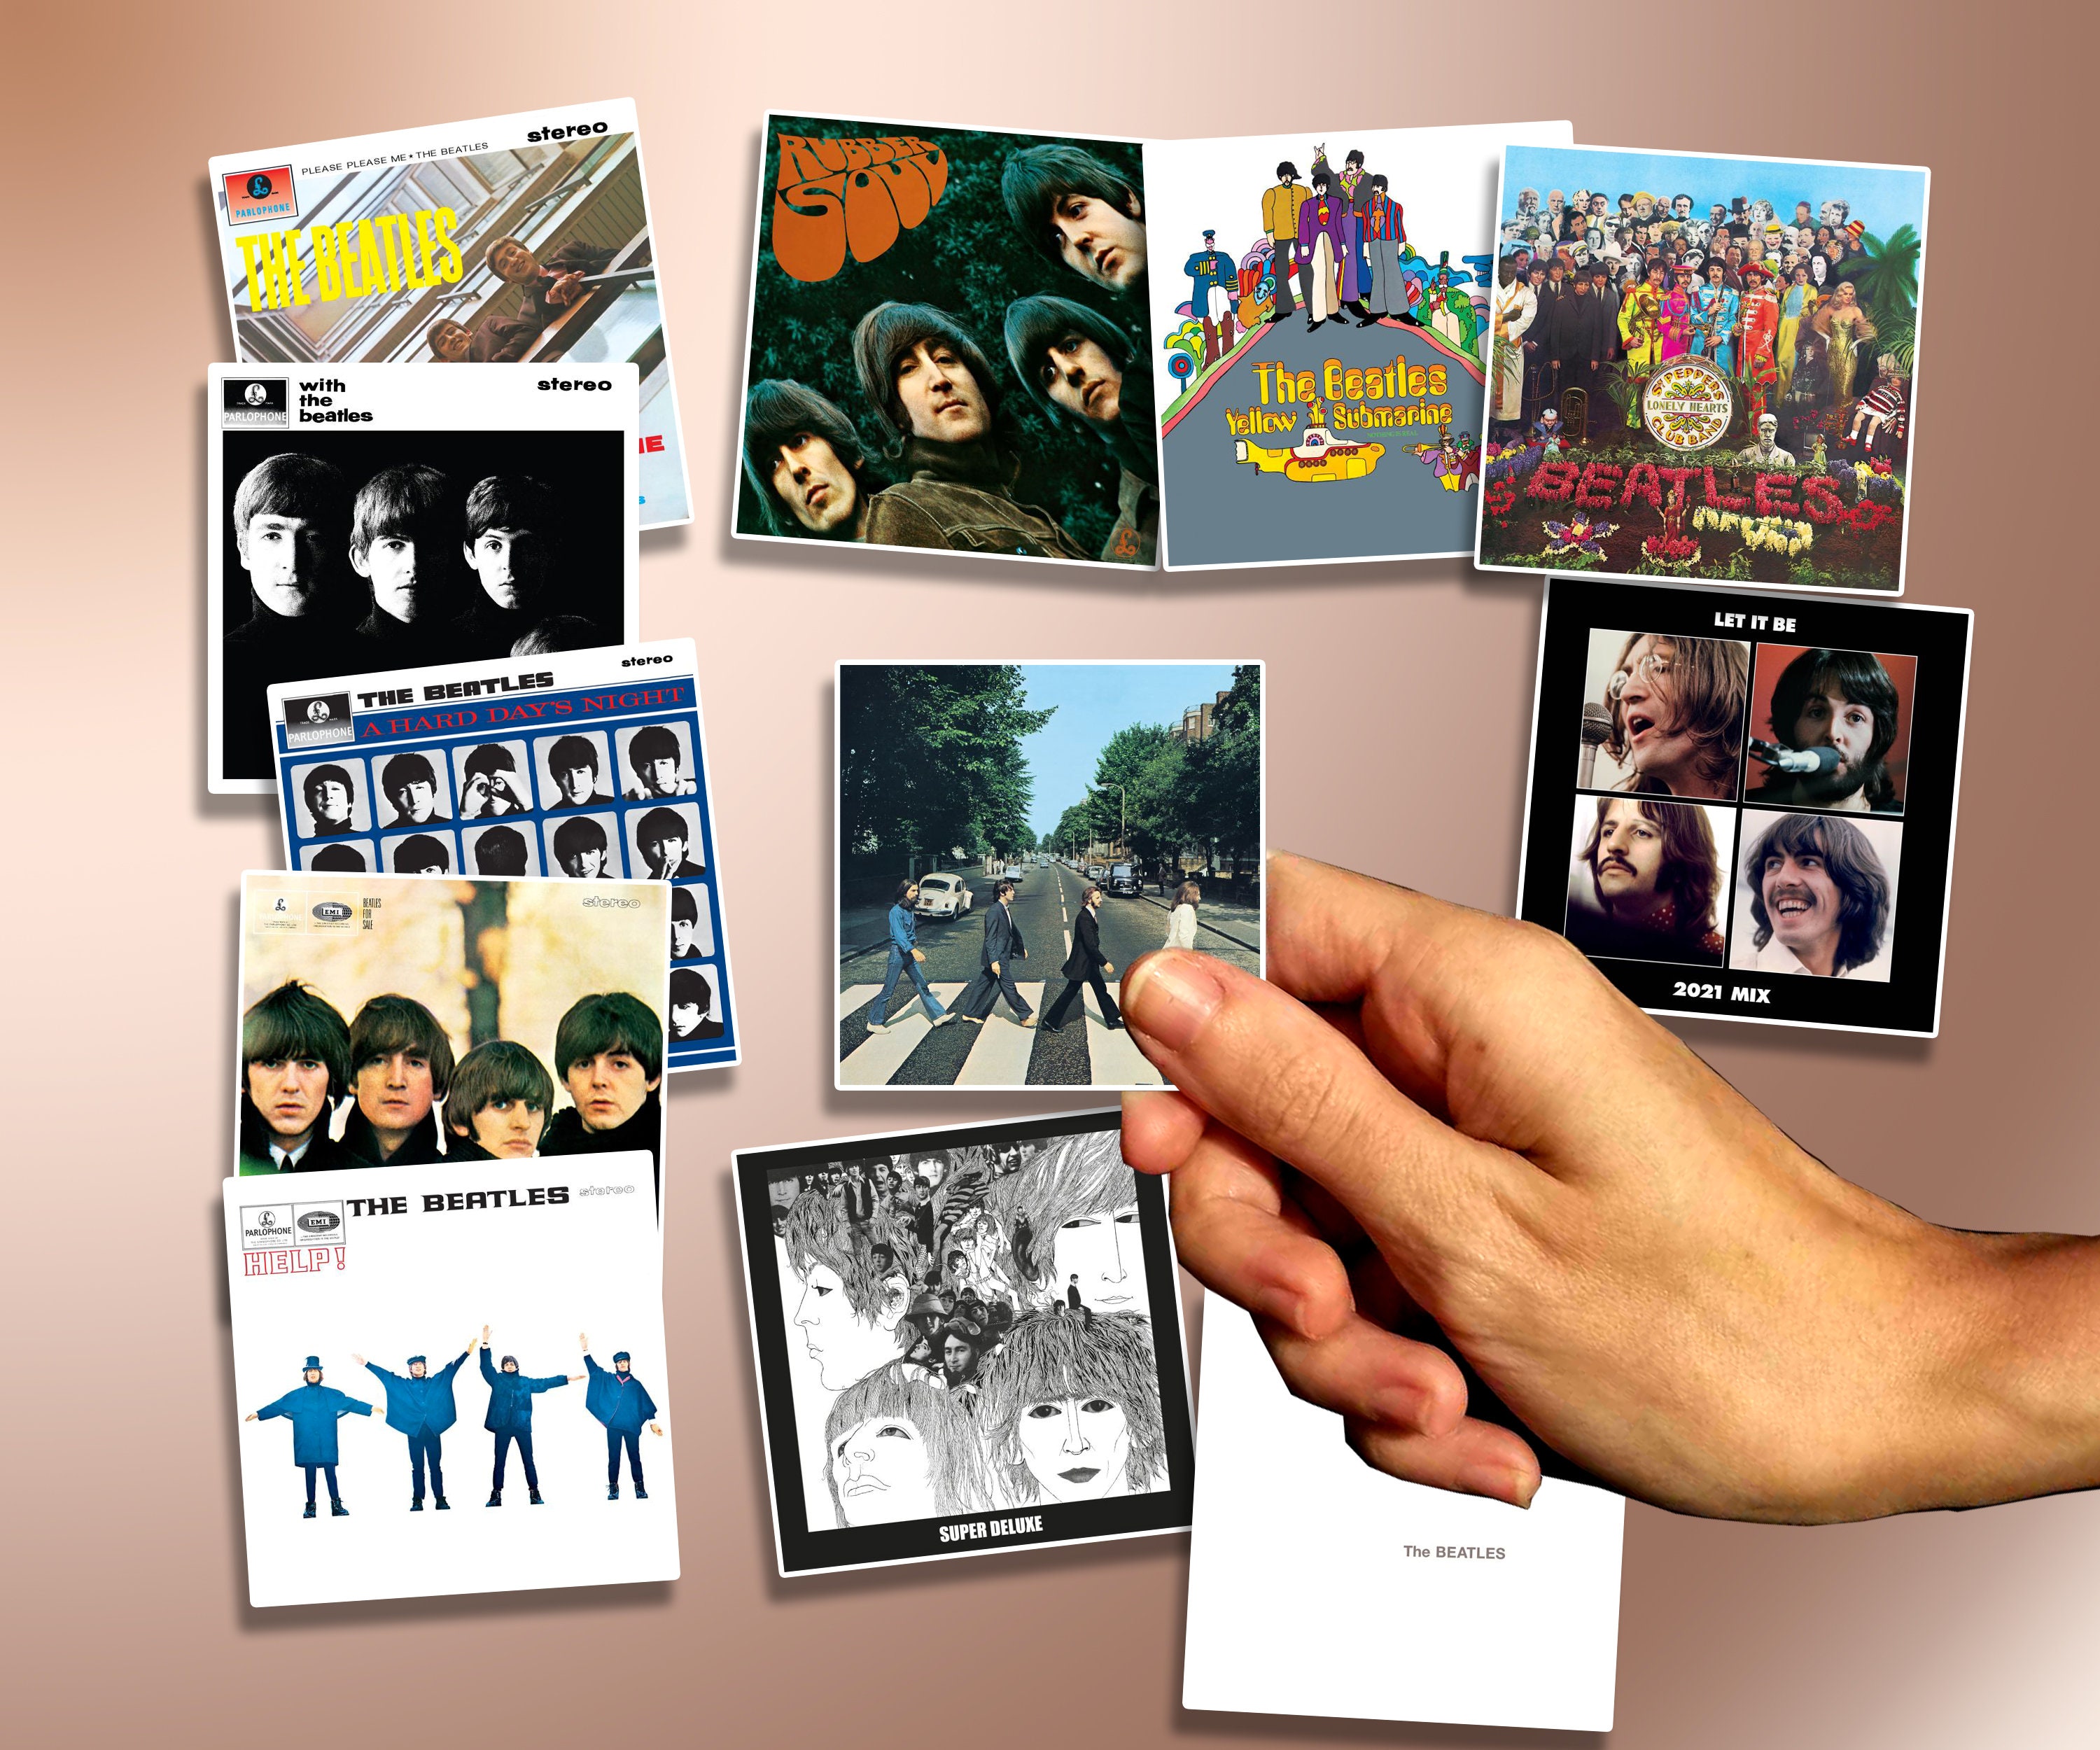 Vintage the Beatles White With White Vinyl and Poster Album 12 LP Record  Vinyl Album 70s Vinyl Capitol 1978 SEBX 11841 